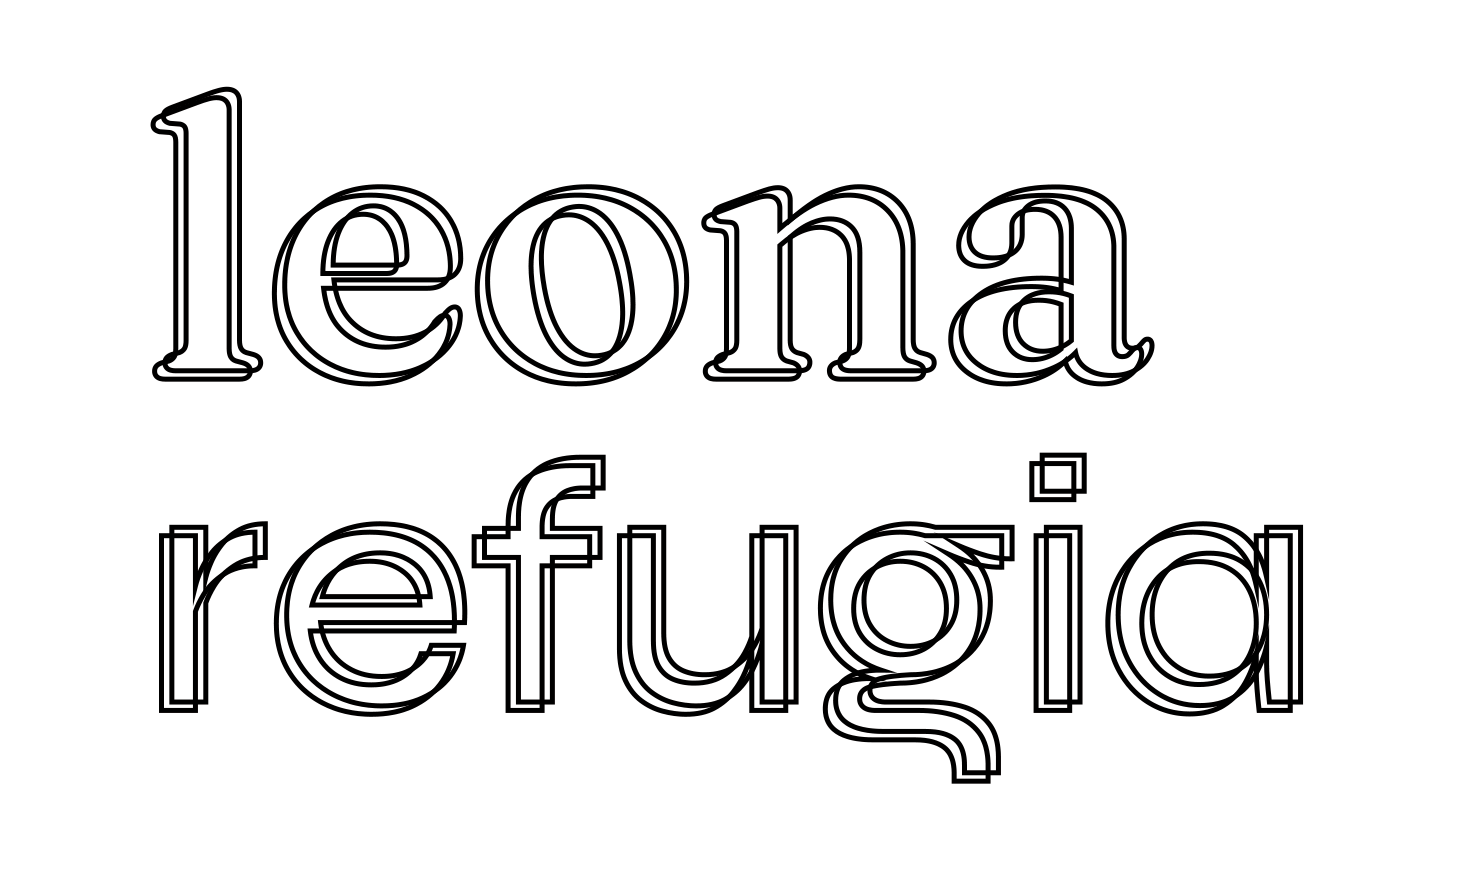 Leona Refugia